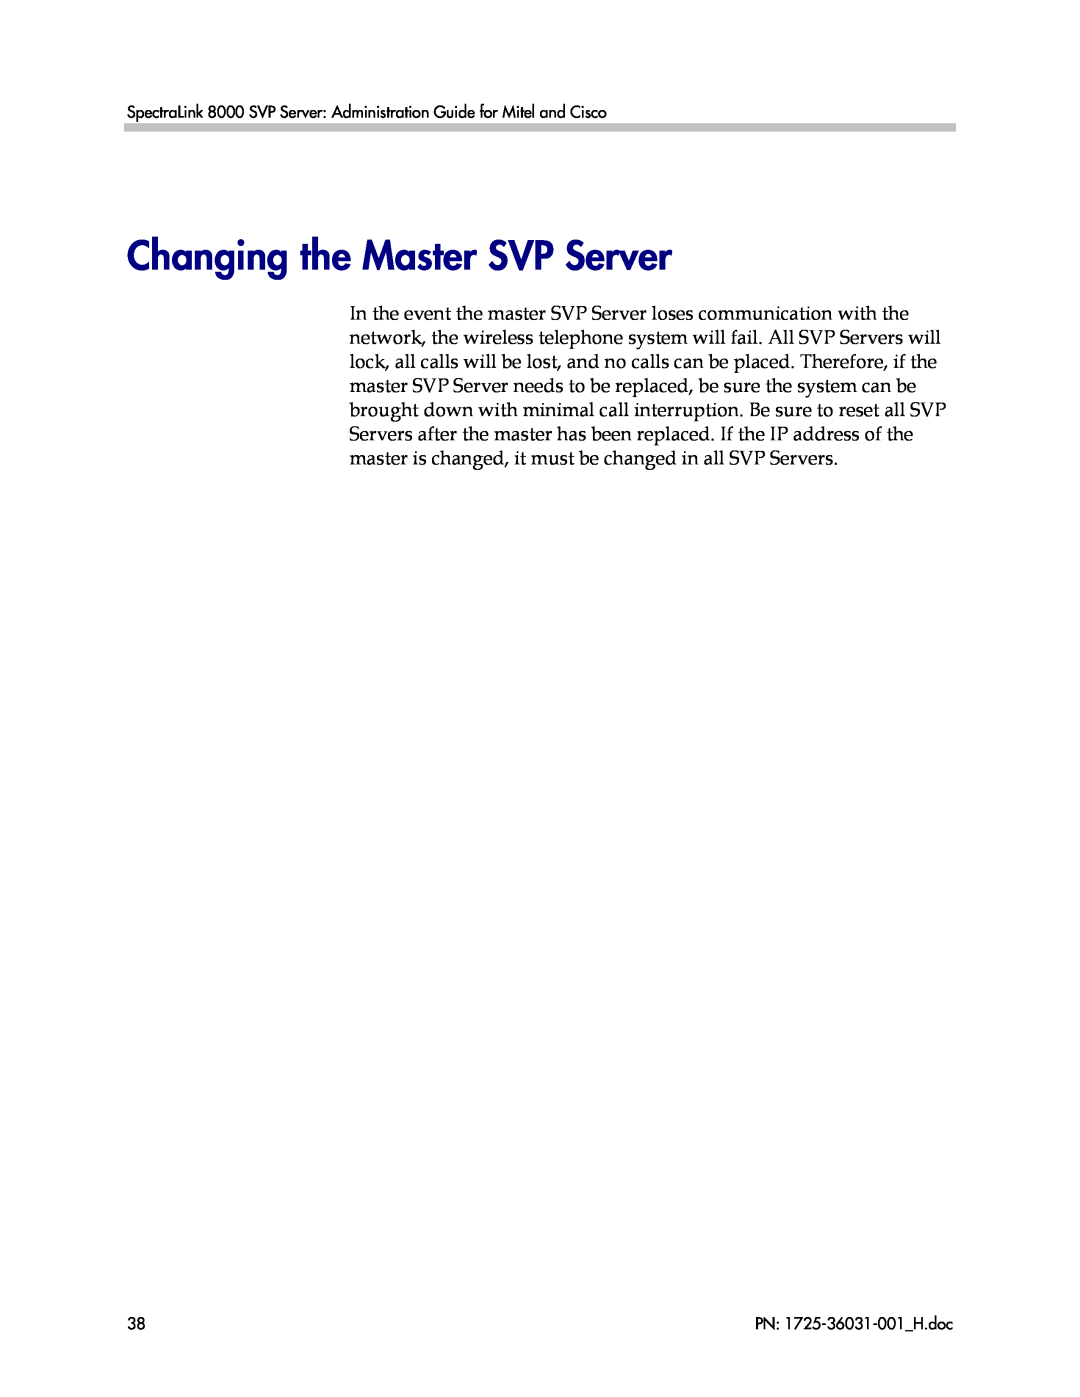 Polycom VP010, 1725-36031-001 manual Changing the Master SVP Server 